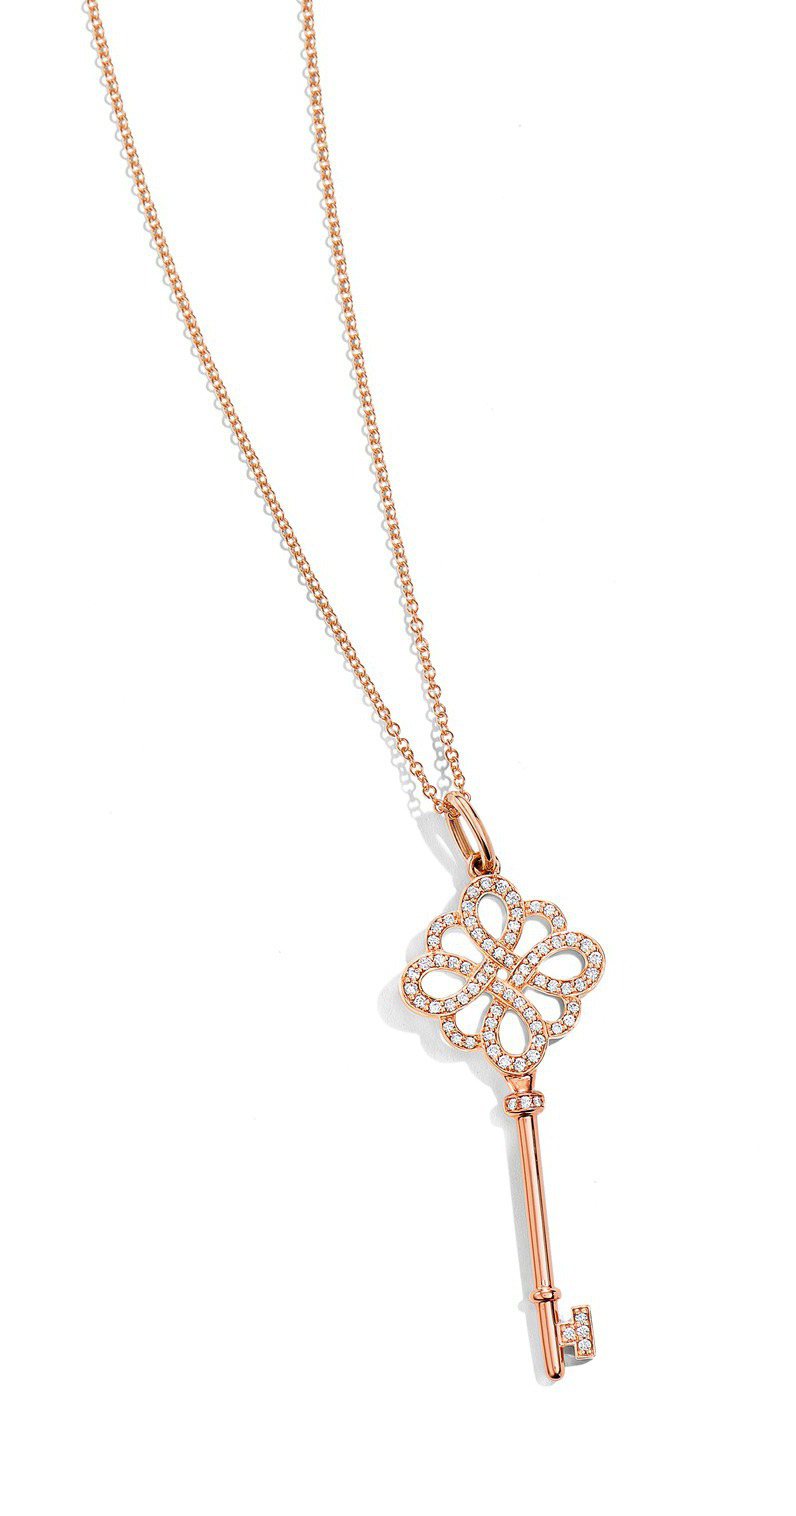 Tiffany Keys 18K玫瑰金Knot鑰匙鍊墜，13萬6,000元（鍊墜價格，不含項鍊）。圖／Tiffany提供